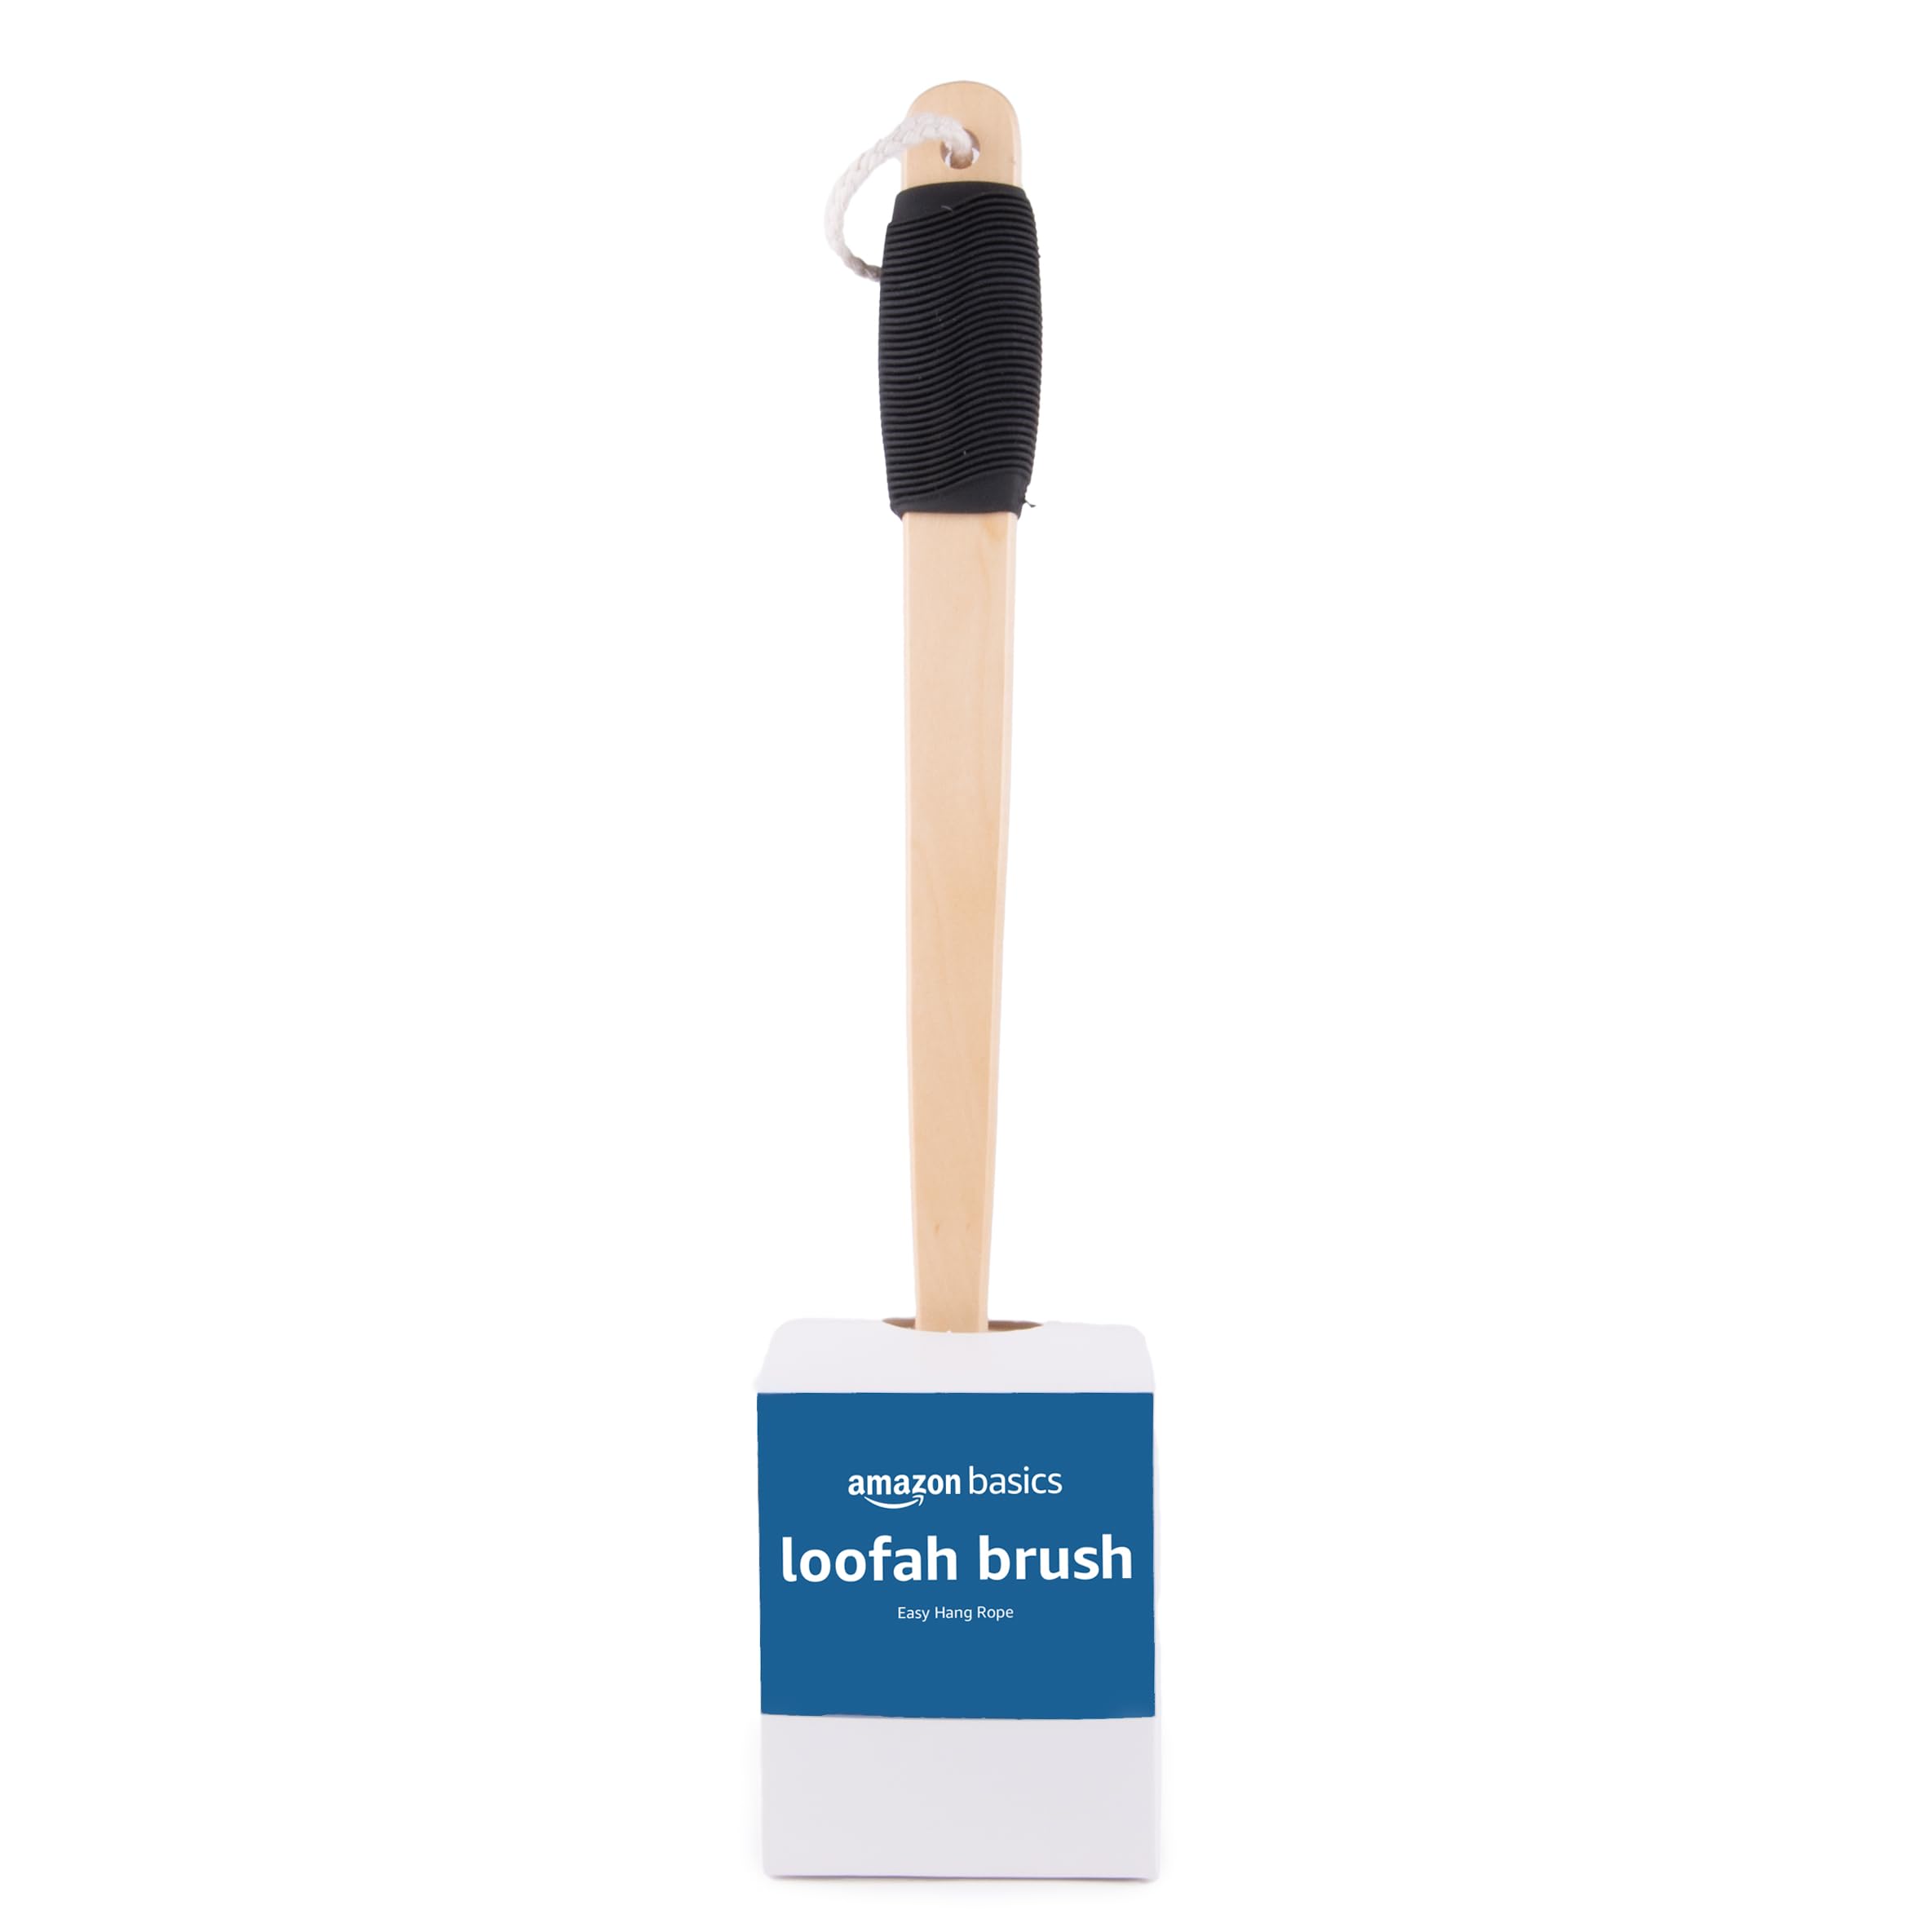 Amazon Basics Loofah Brush, Black Pouf, 60 G, Pack of 1